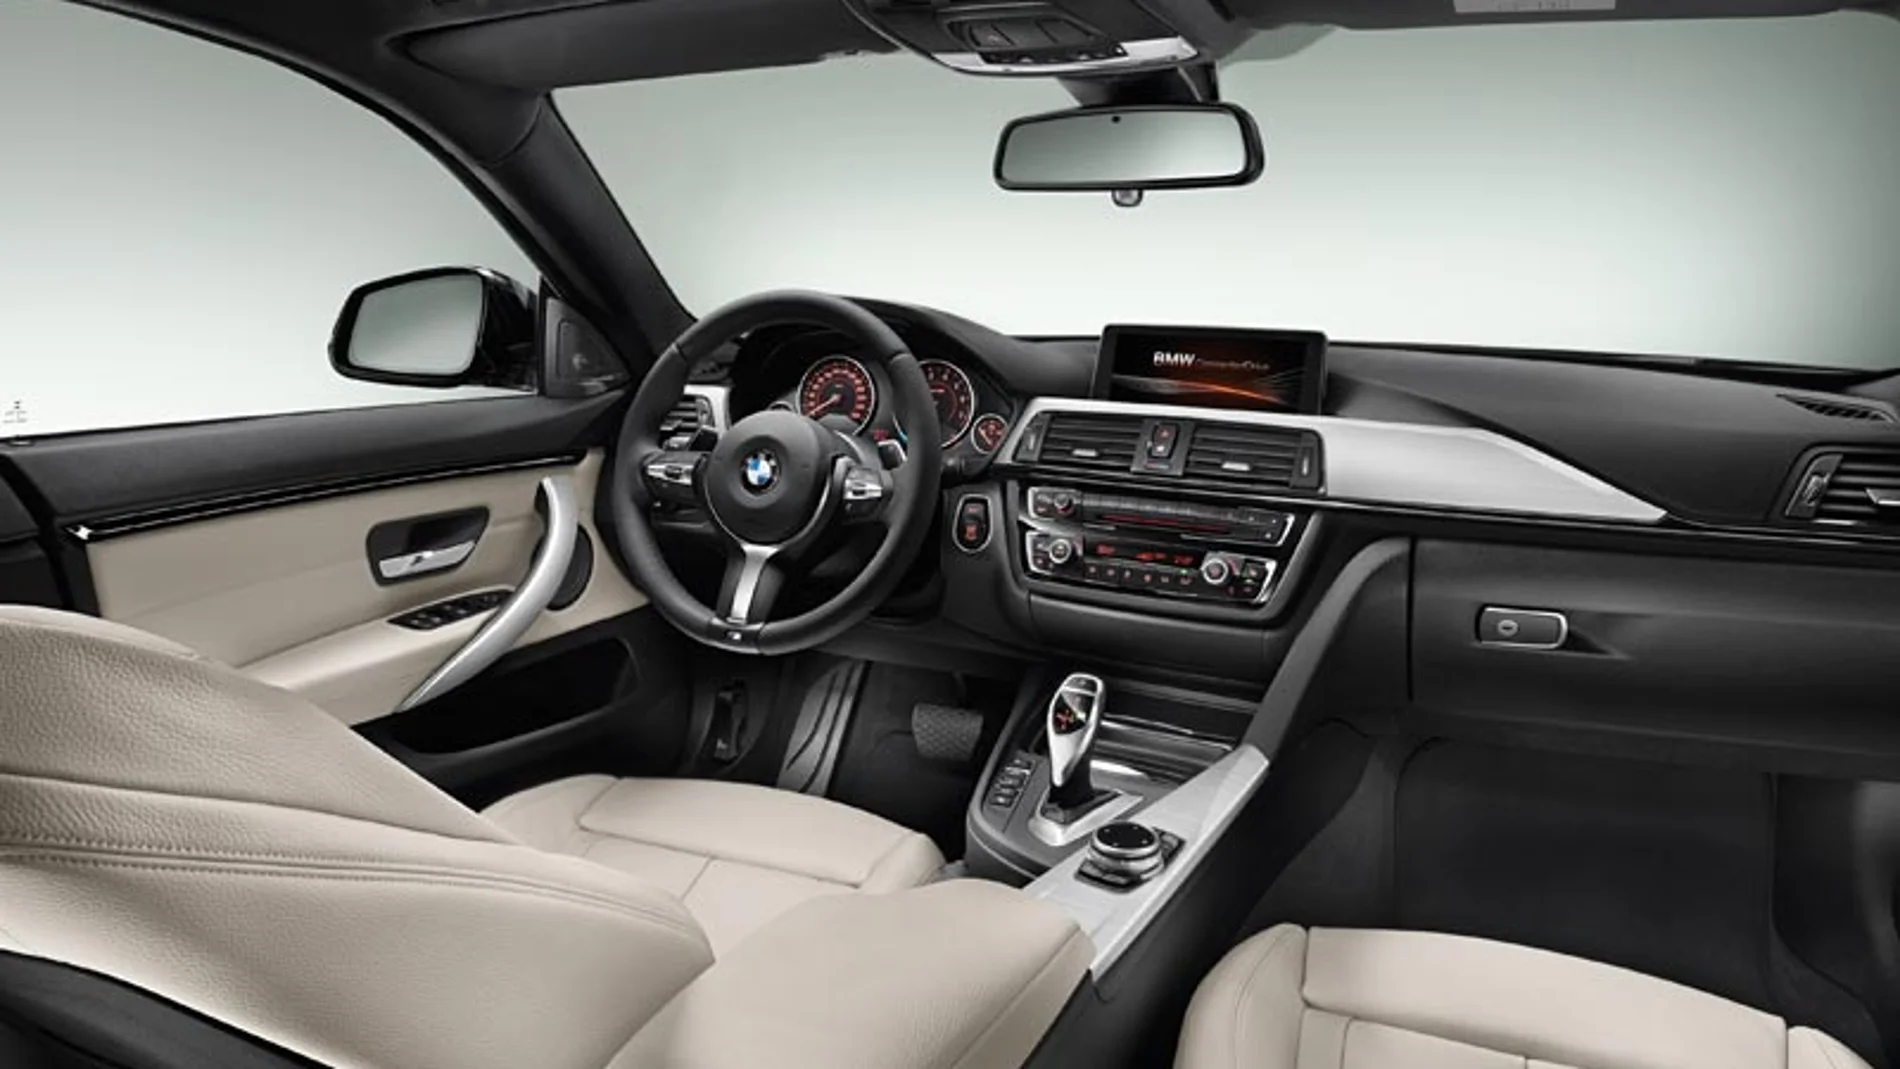 El BMW Serie 4 Gran Coupé tiene amplias posibilidades de personalización exterior e interior.